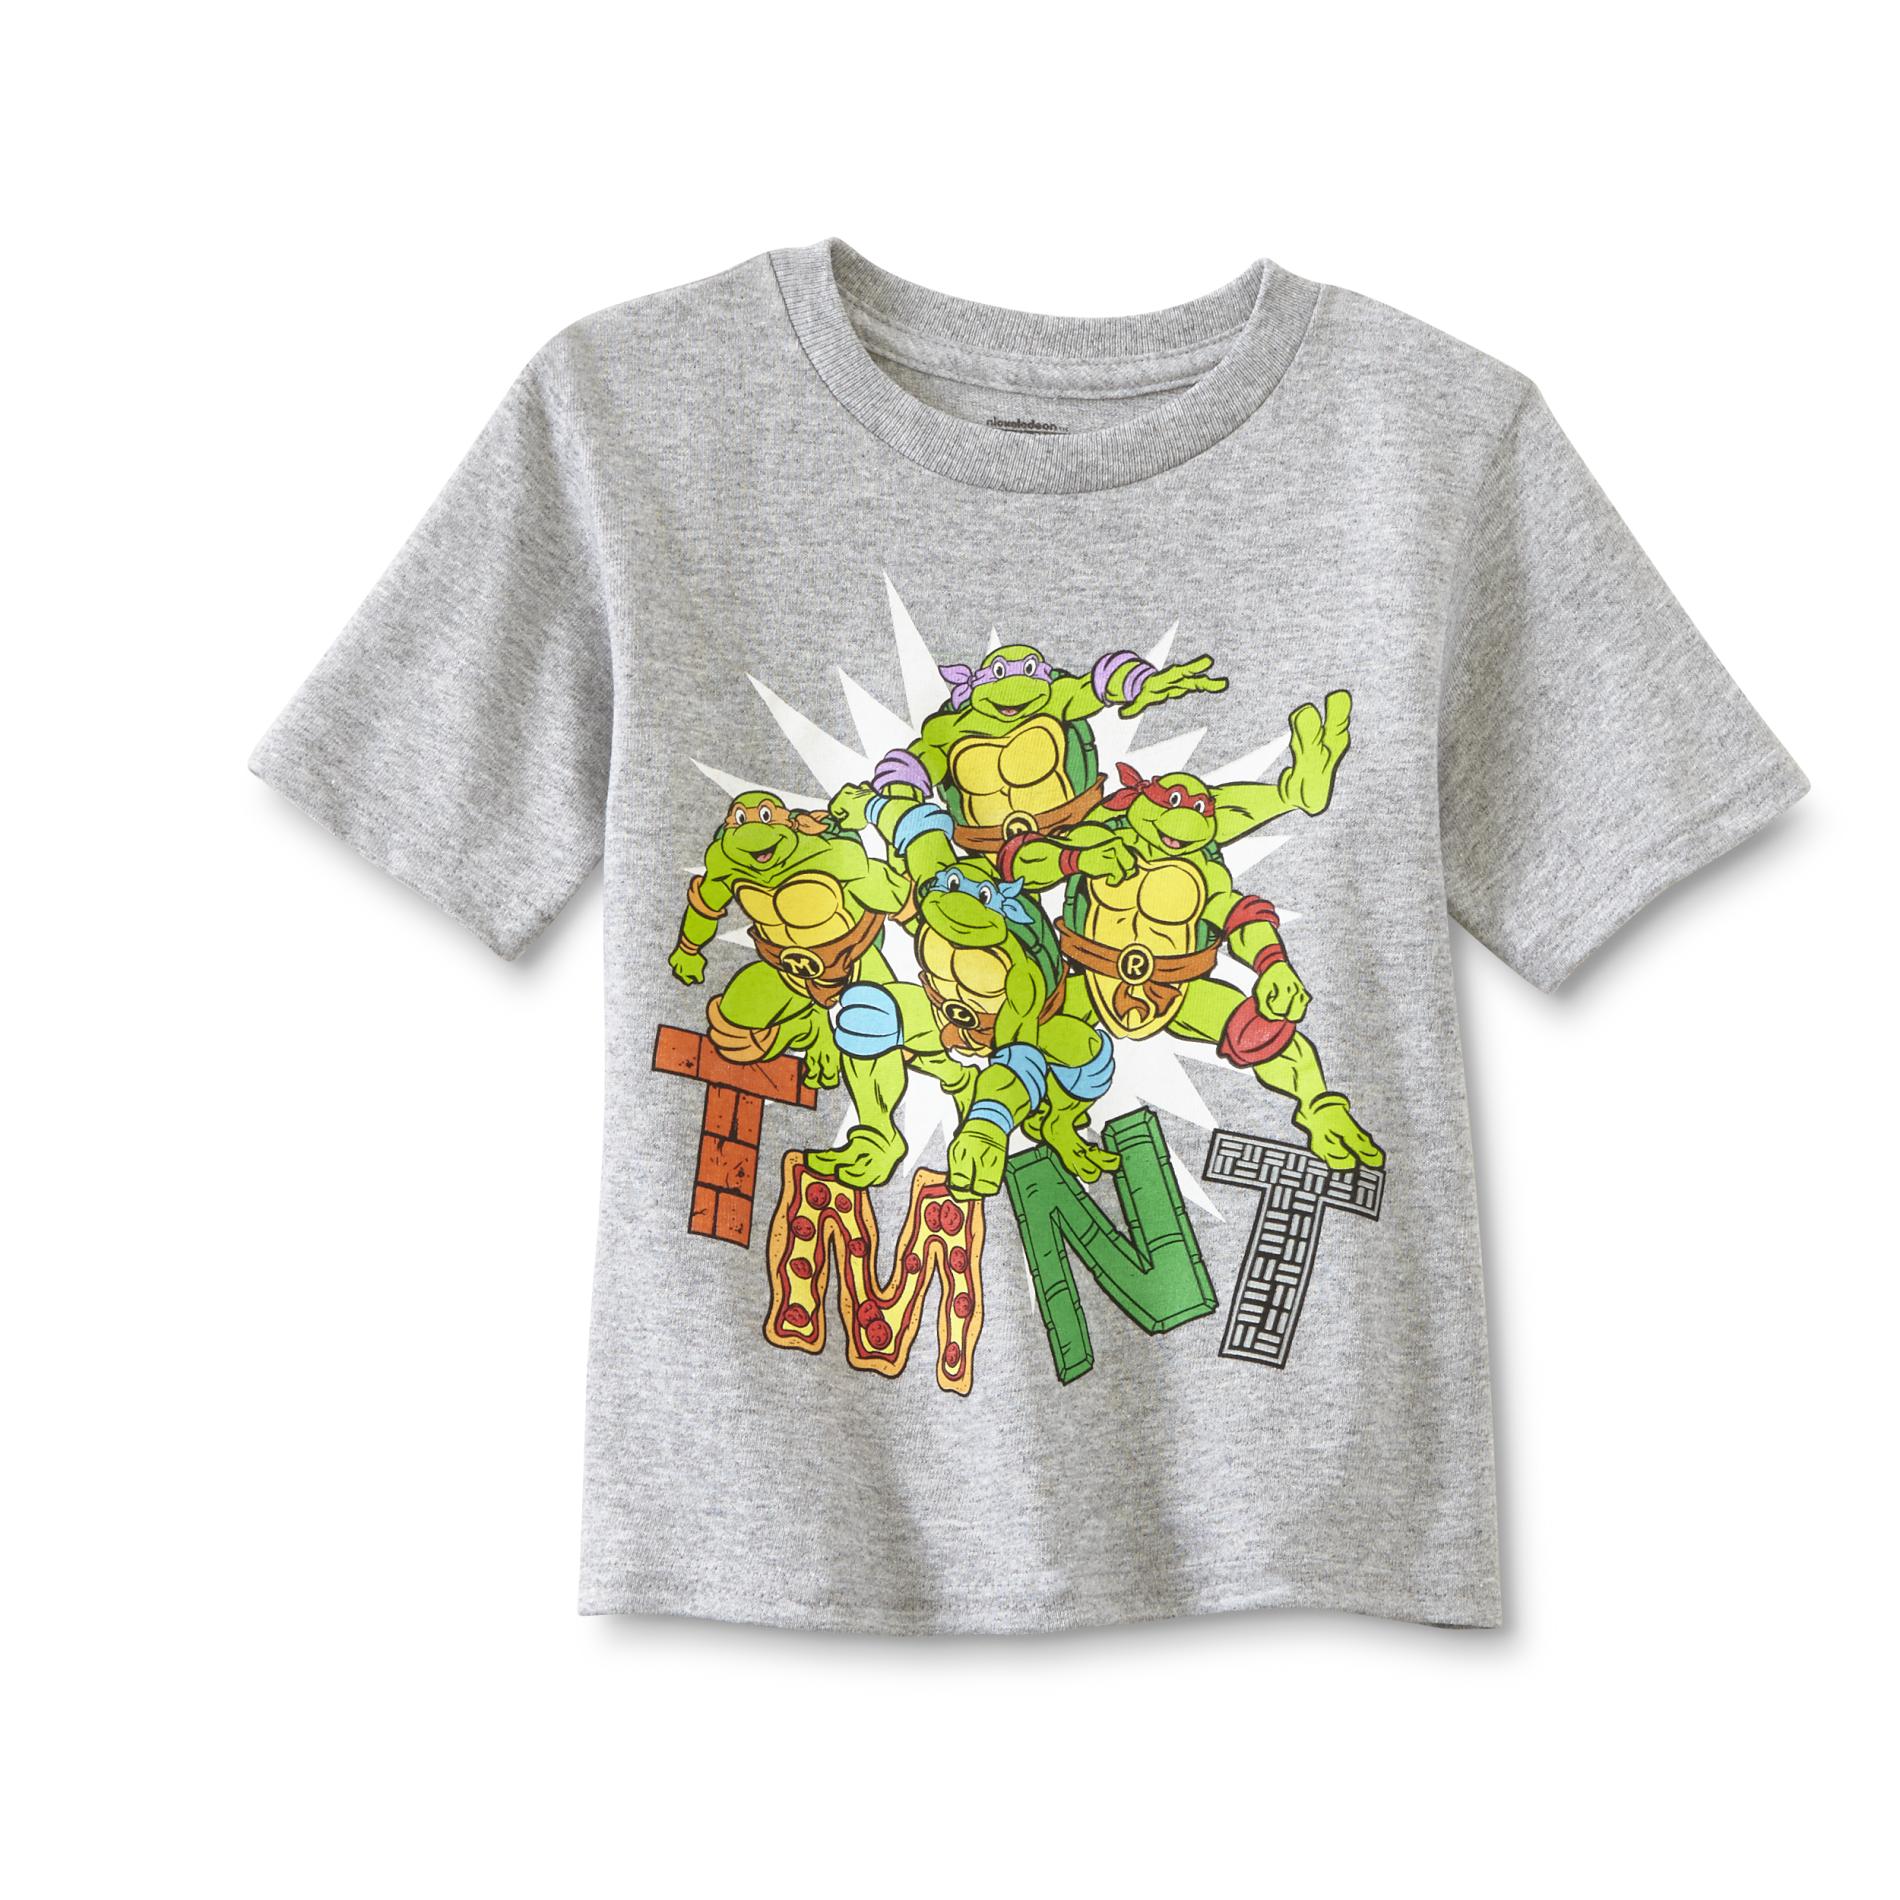 Nickelodeon Teenage Mutant Ninja Turtles Toddler Boys' Graphic T-Shirt